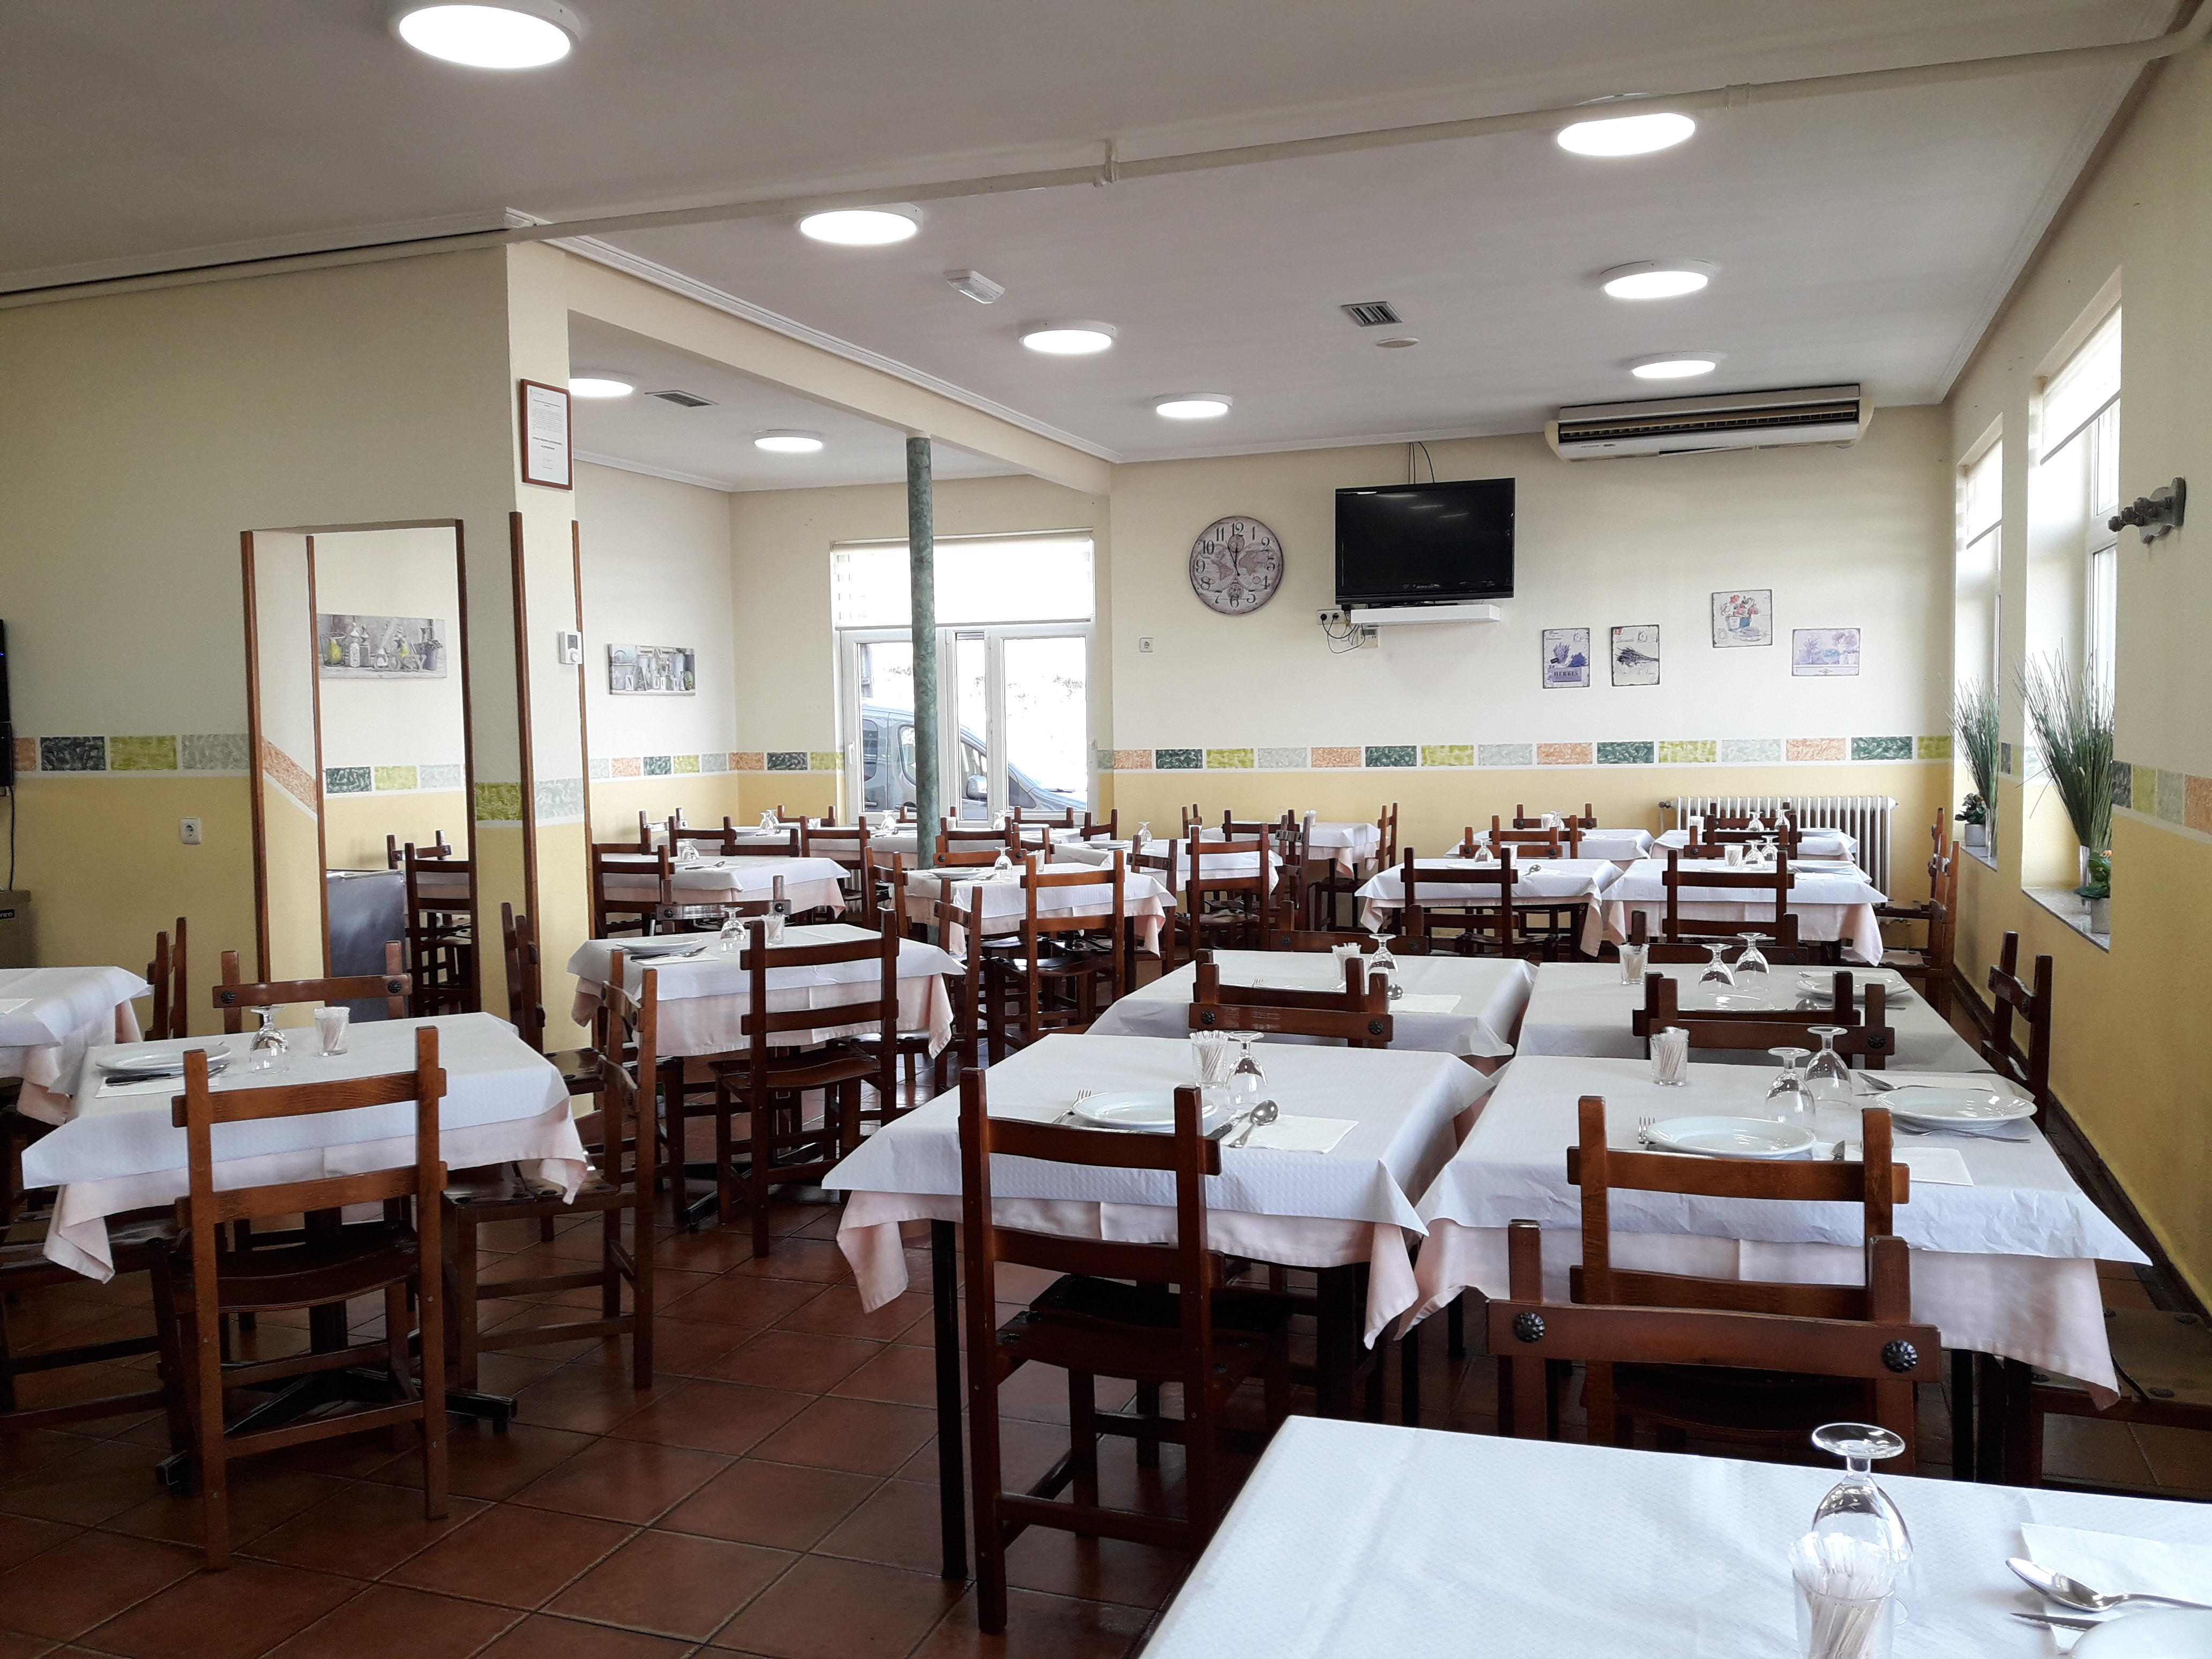 Fotos de Restaurante La Magdalena-e.S. El Teleno